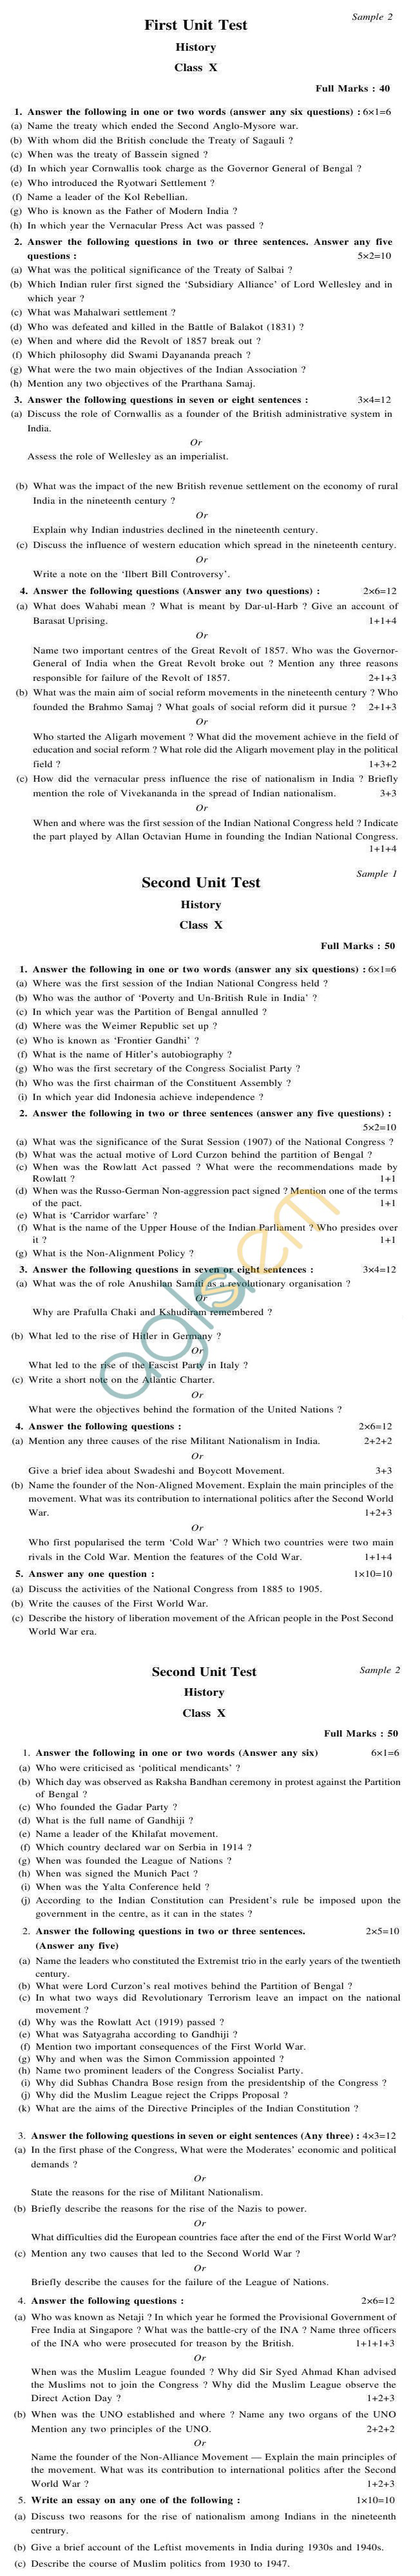 WB Board Sample Question Papers for Madhyamik Pariksha (Class 10) - History